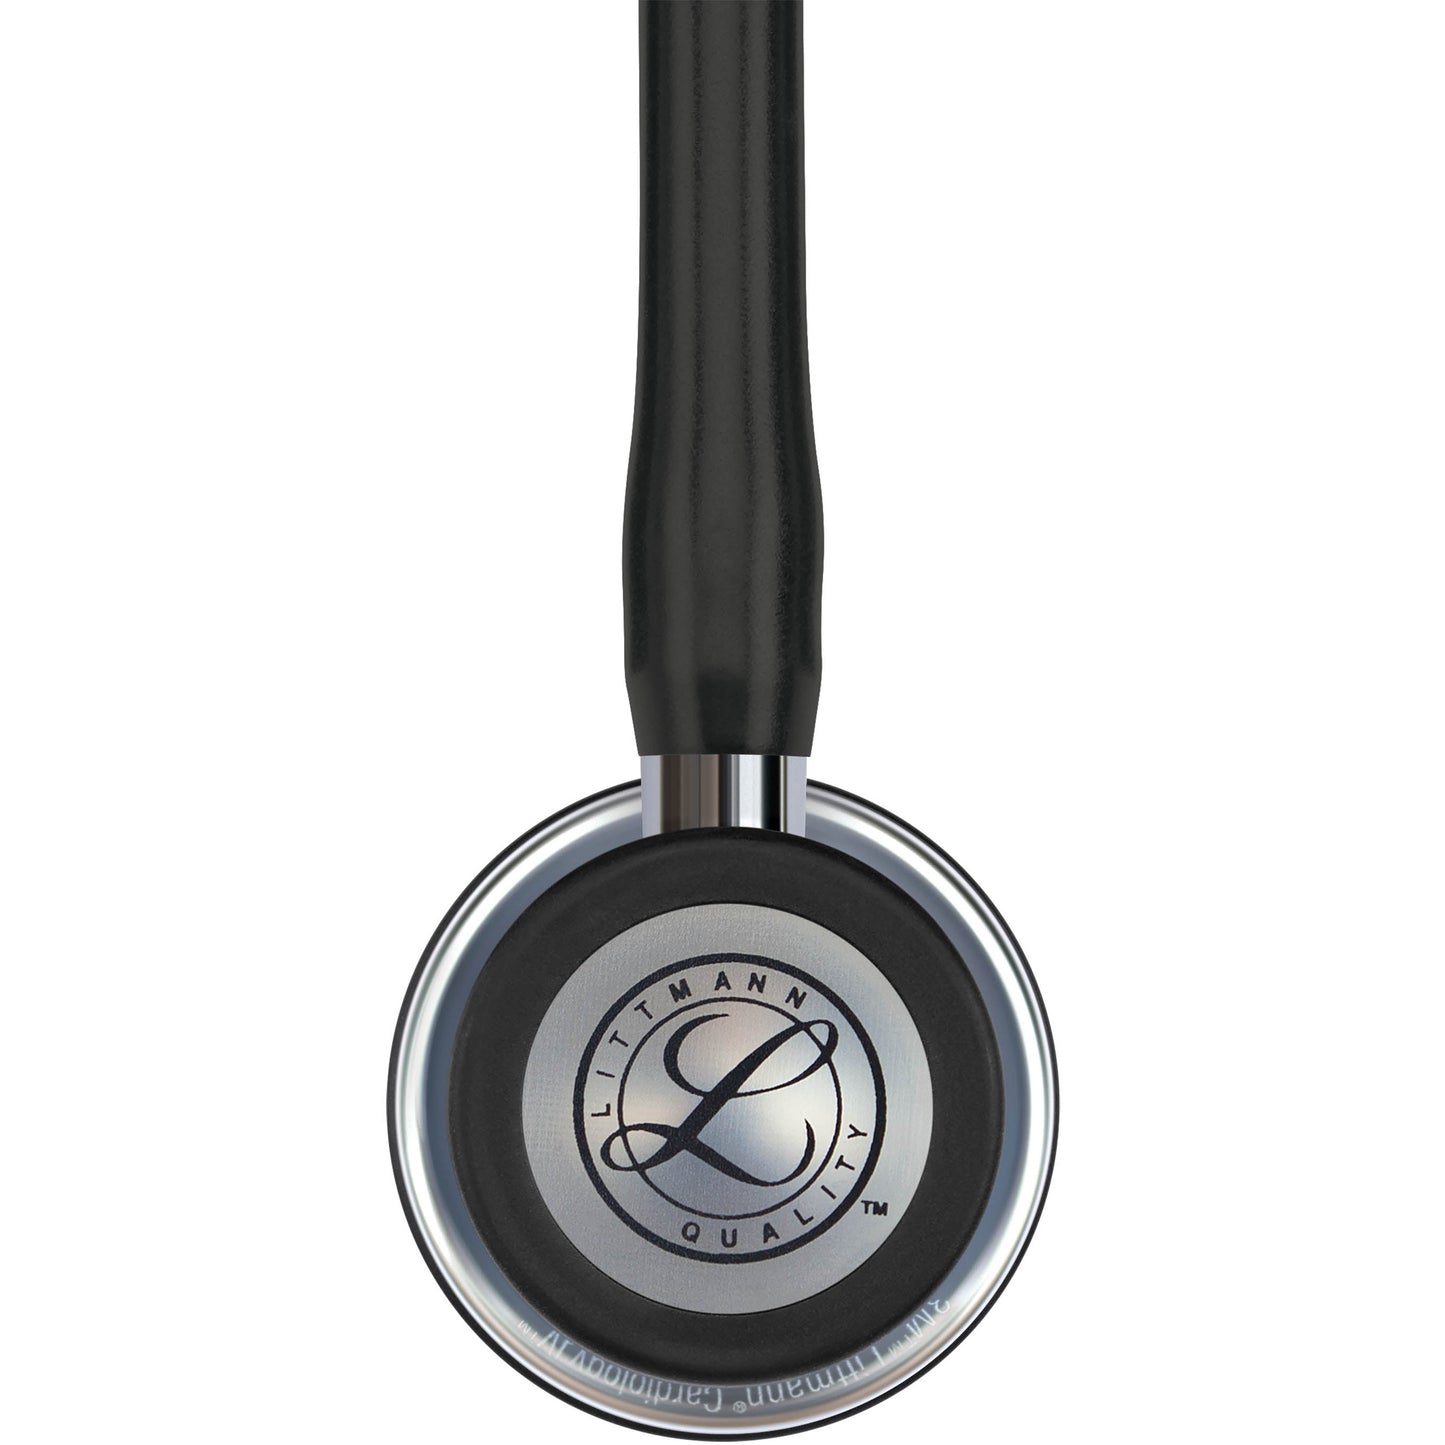 Littmann Cardiology IV Stethoscope: Black & Mirror-Finish 6177 3M Littmann